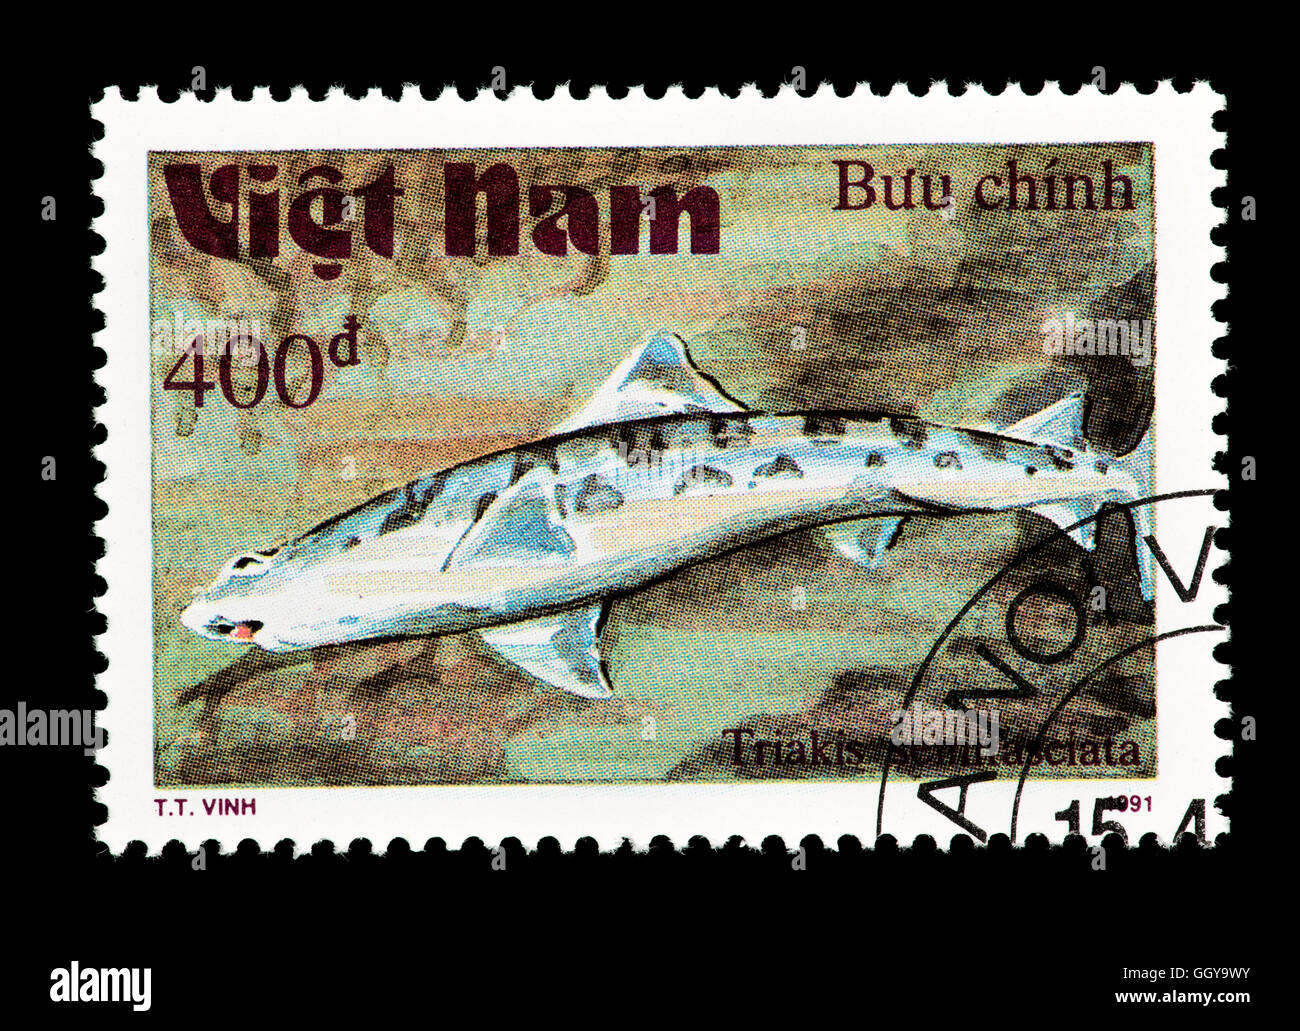 Postage stamp from Vietnam depicting leopard shark (Triakis semifasciata). Stock Photo